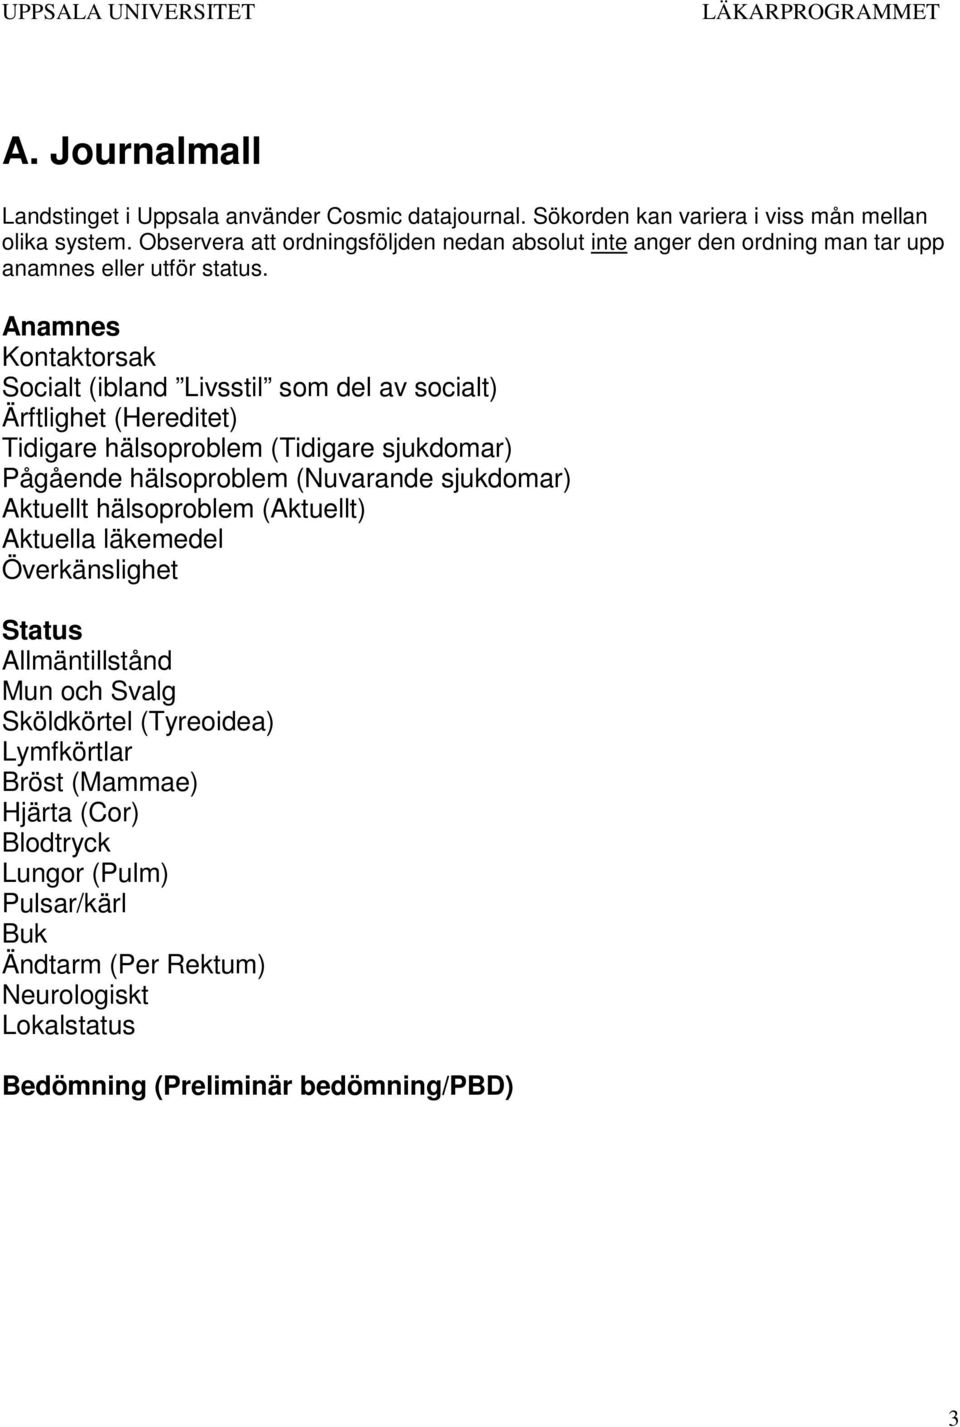 KOMPENDIUM. ANAMNES och STATUS. Reviderad version II - PDF Gratis ...